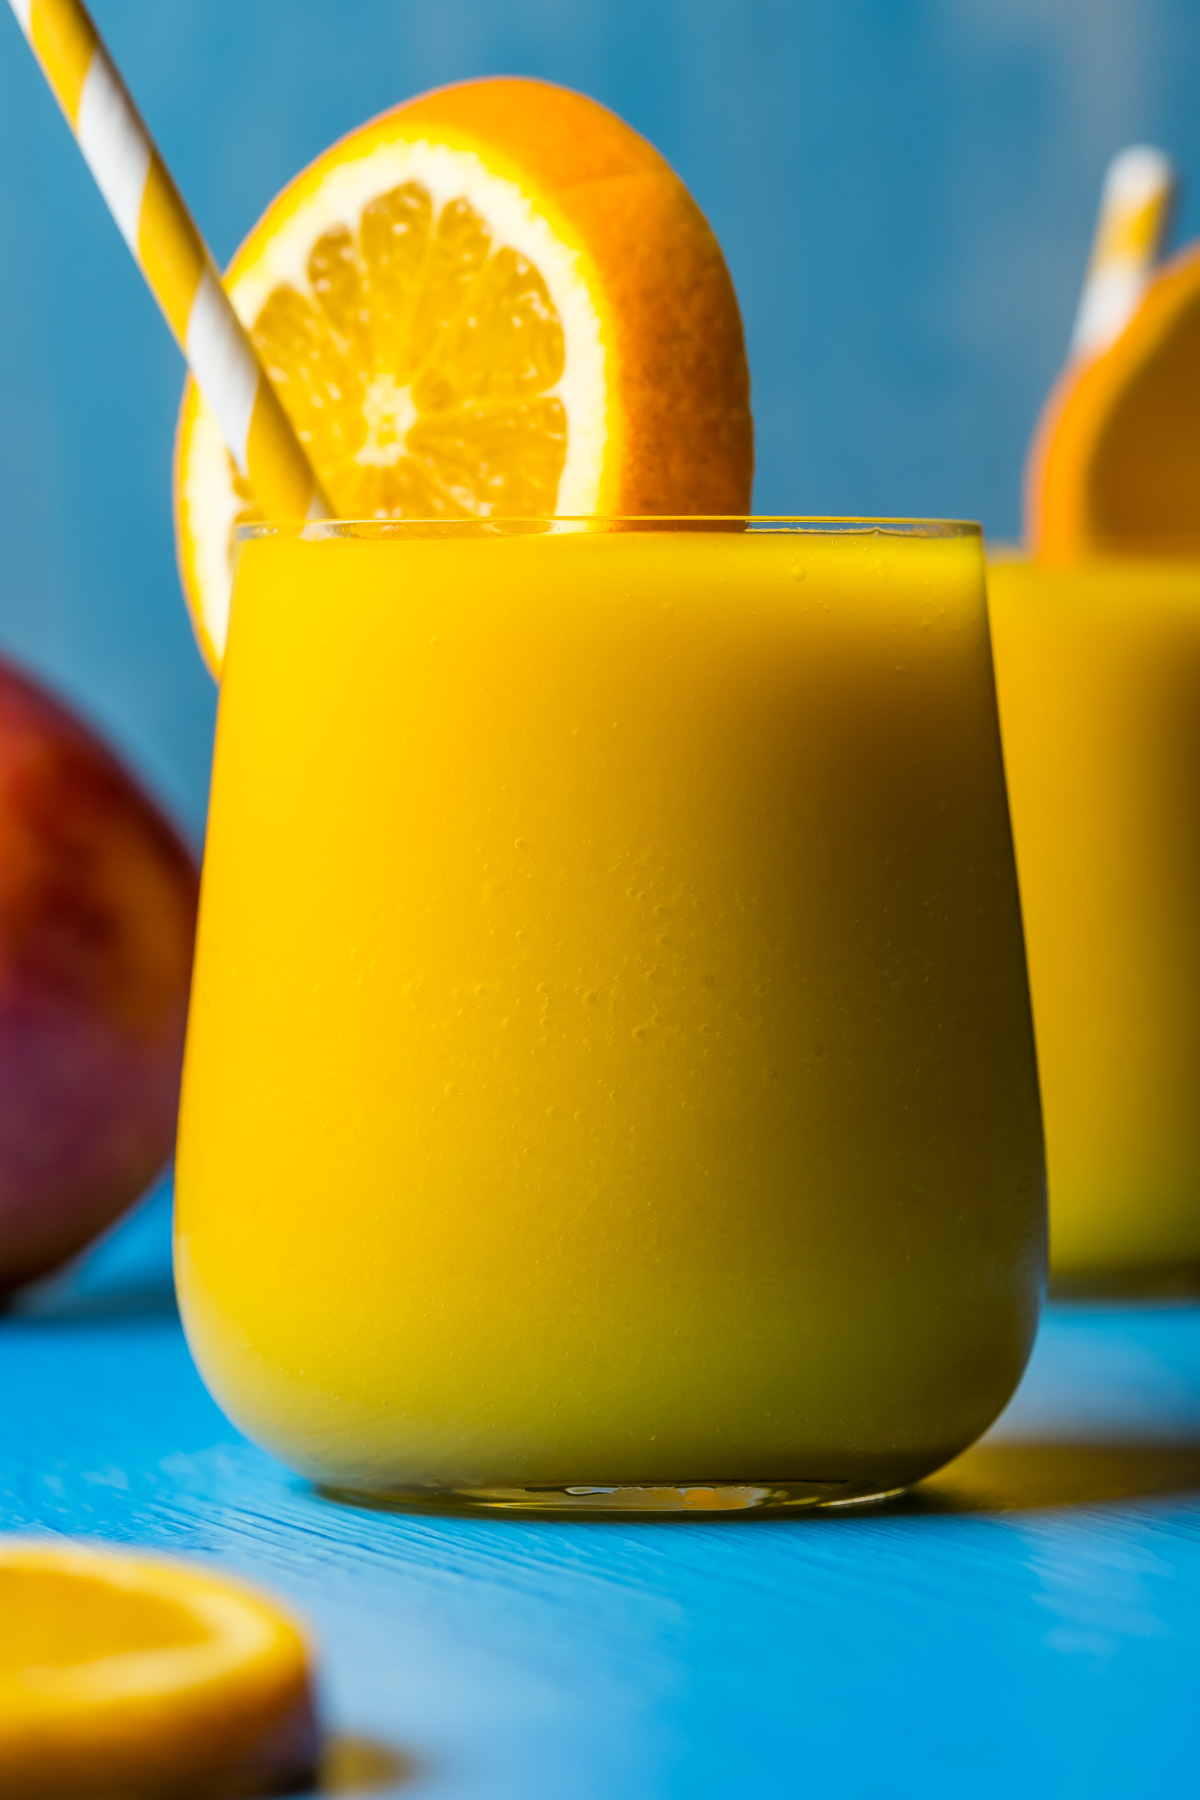 Mango orange smoothie in glasses with a slice of fresh orange and straws.